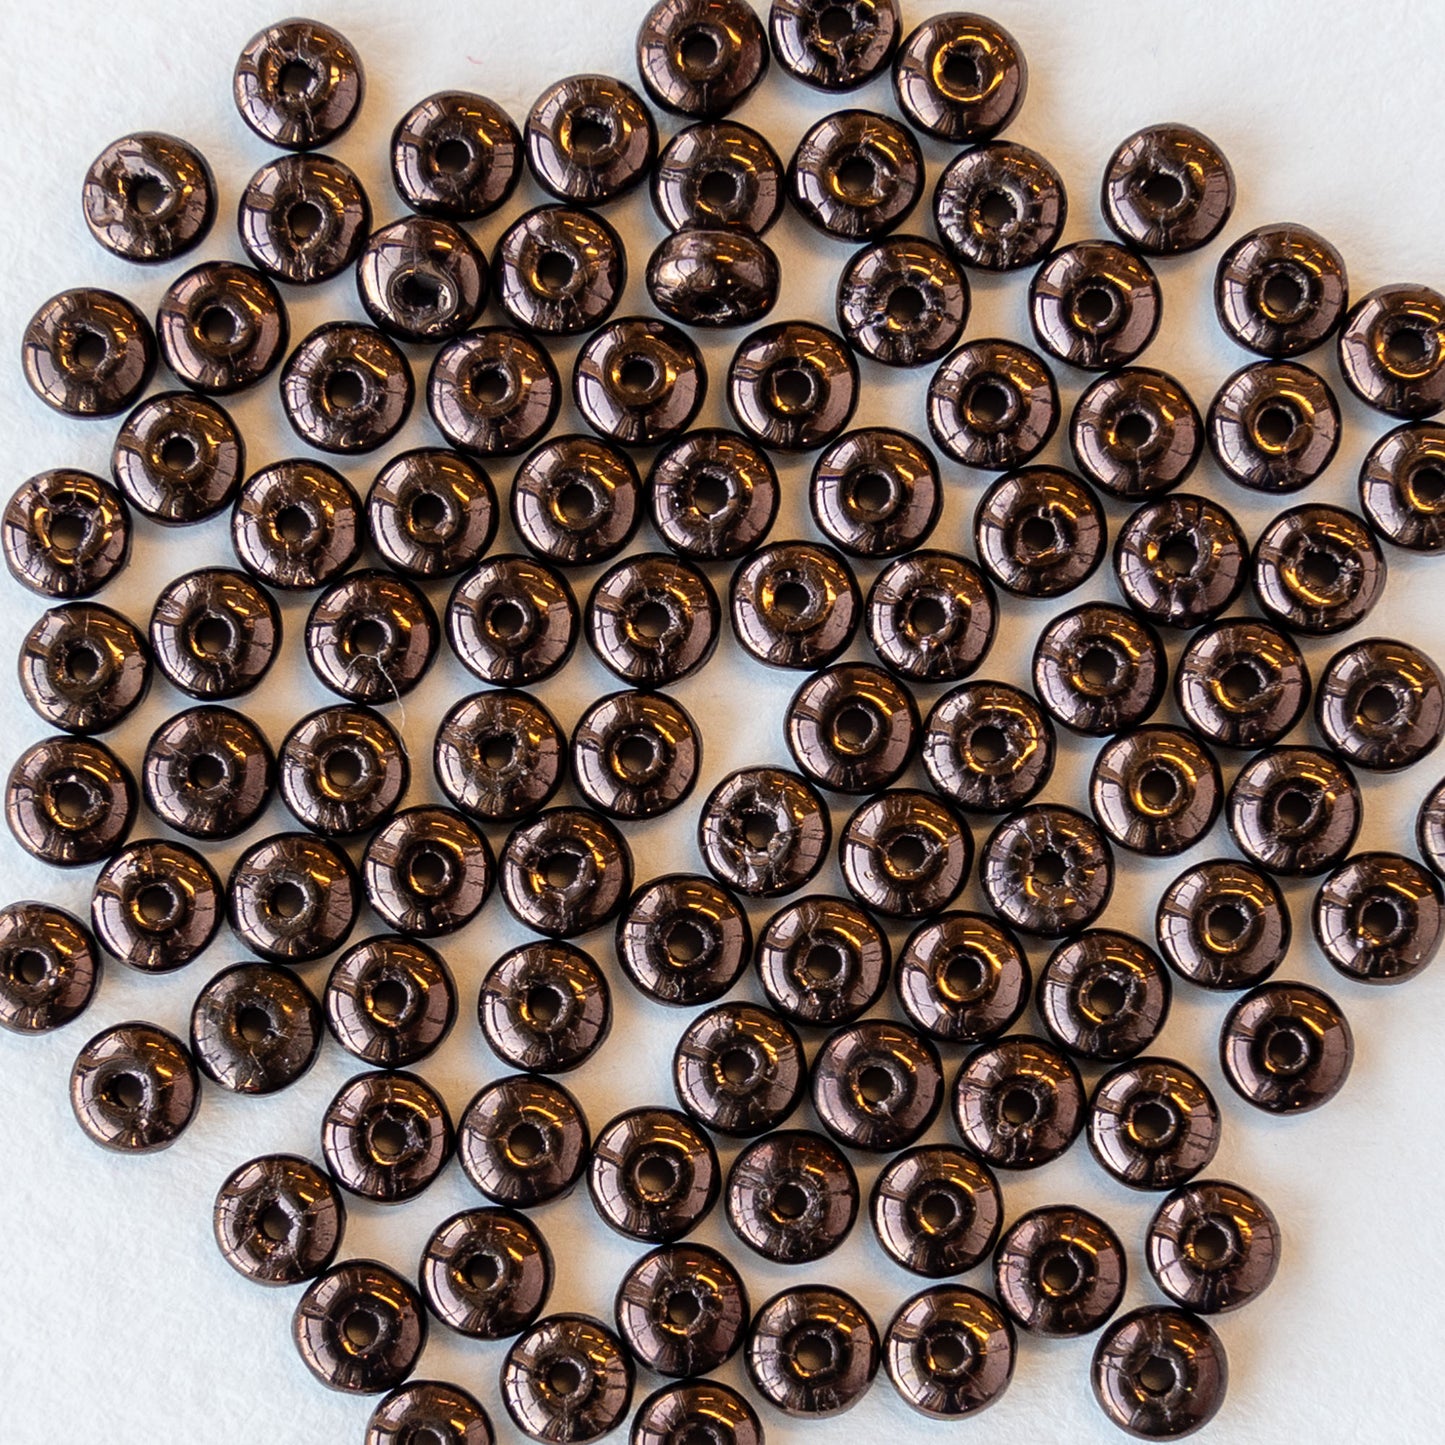 3mm Rondelle Beads - Metallic Bronze - 100 beads